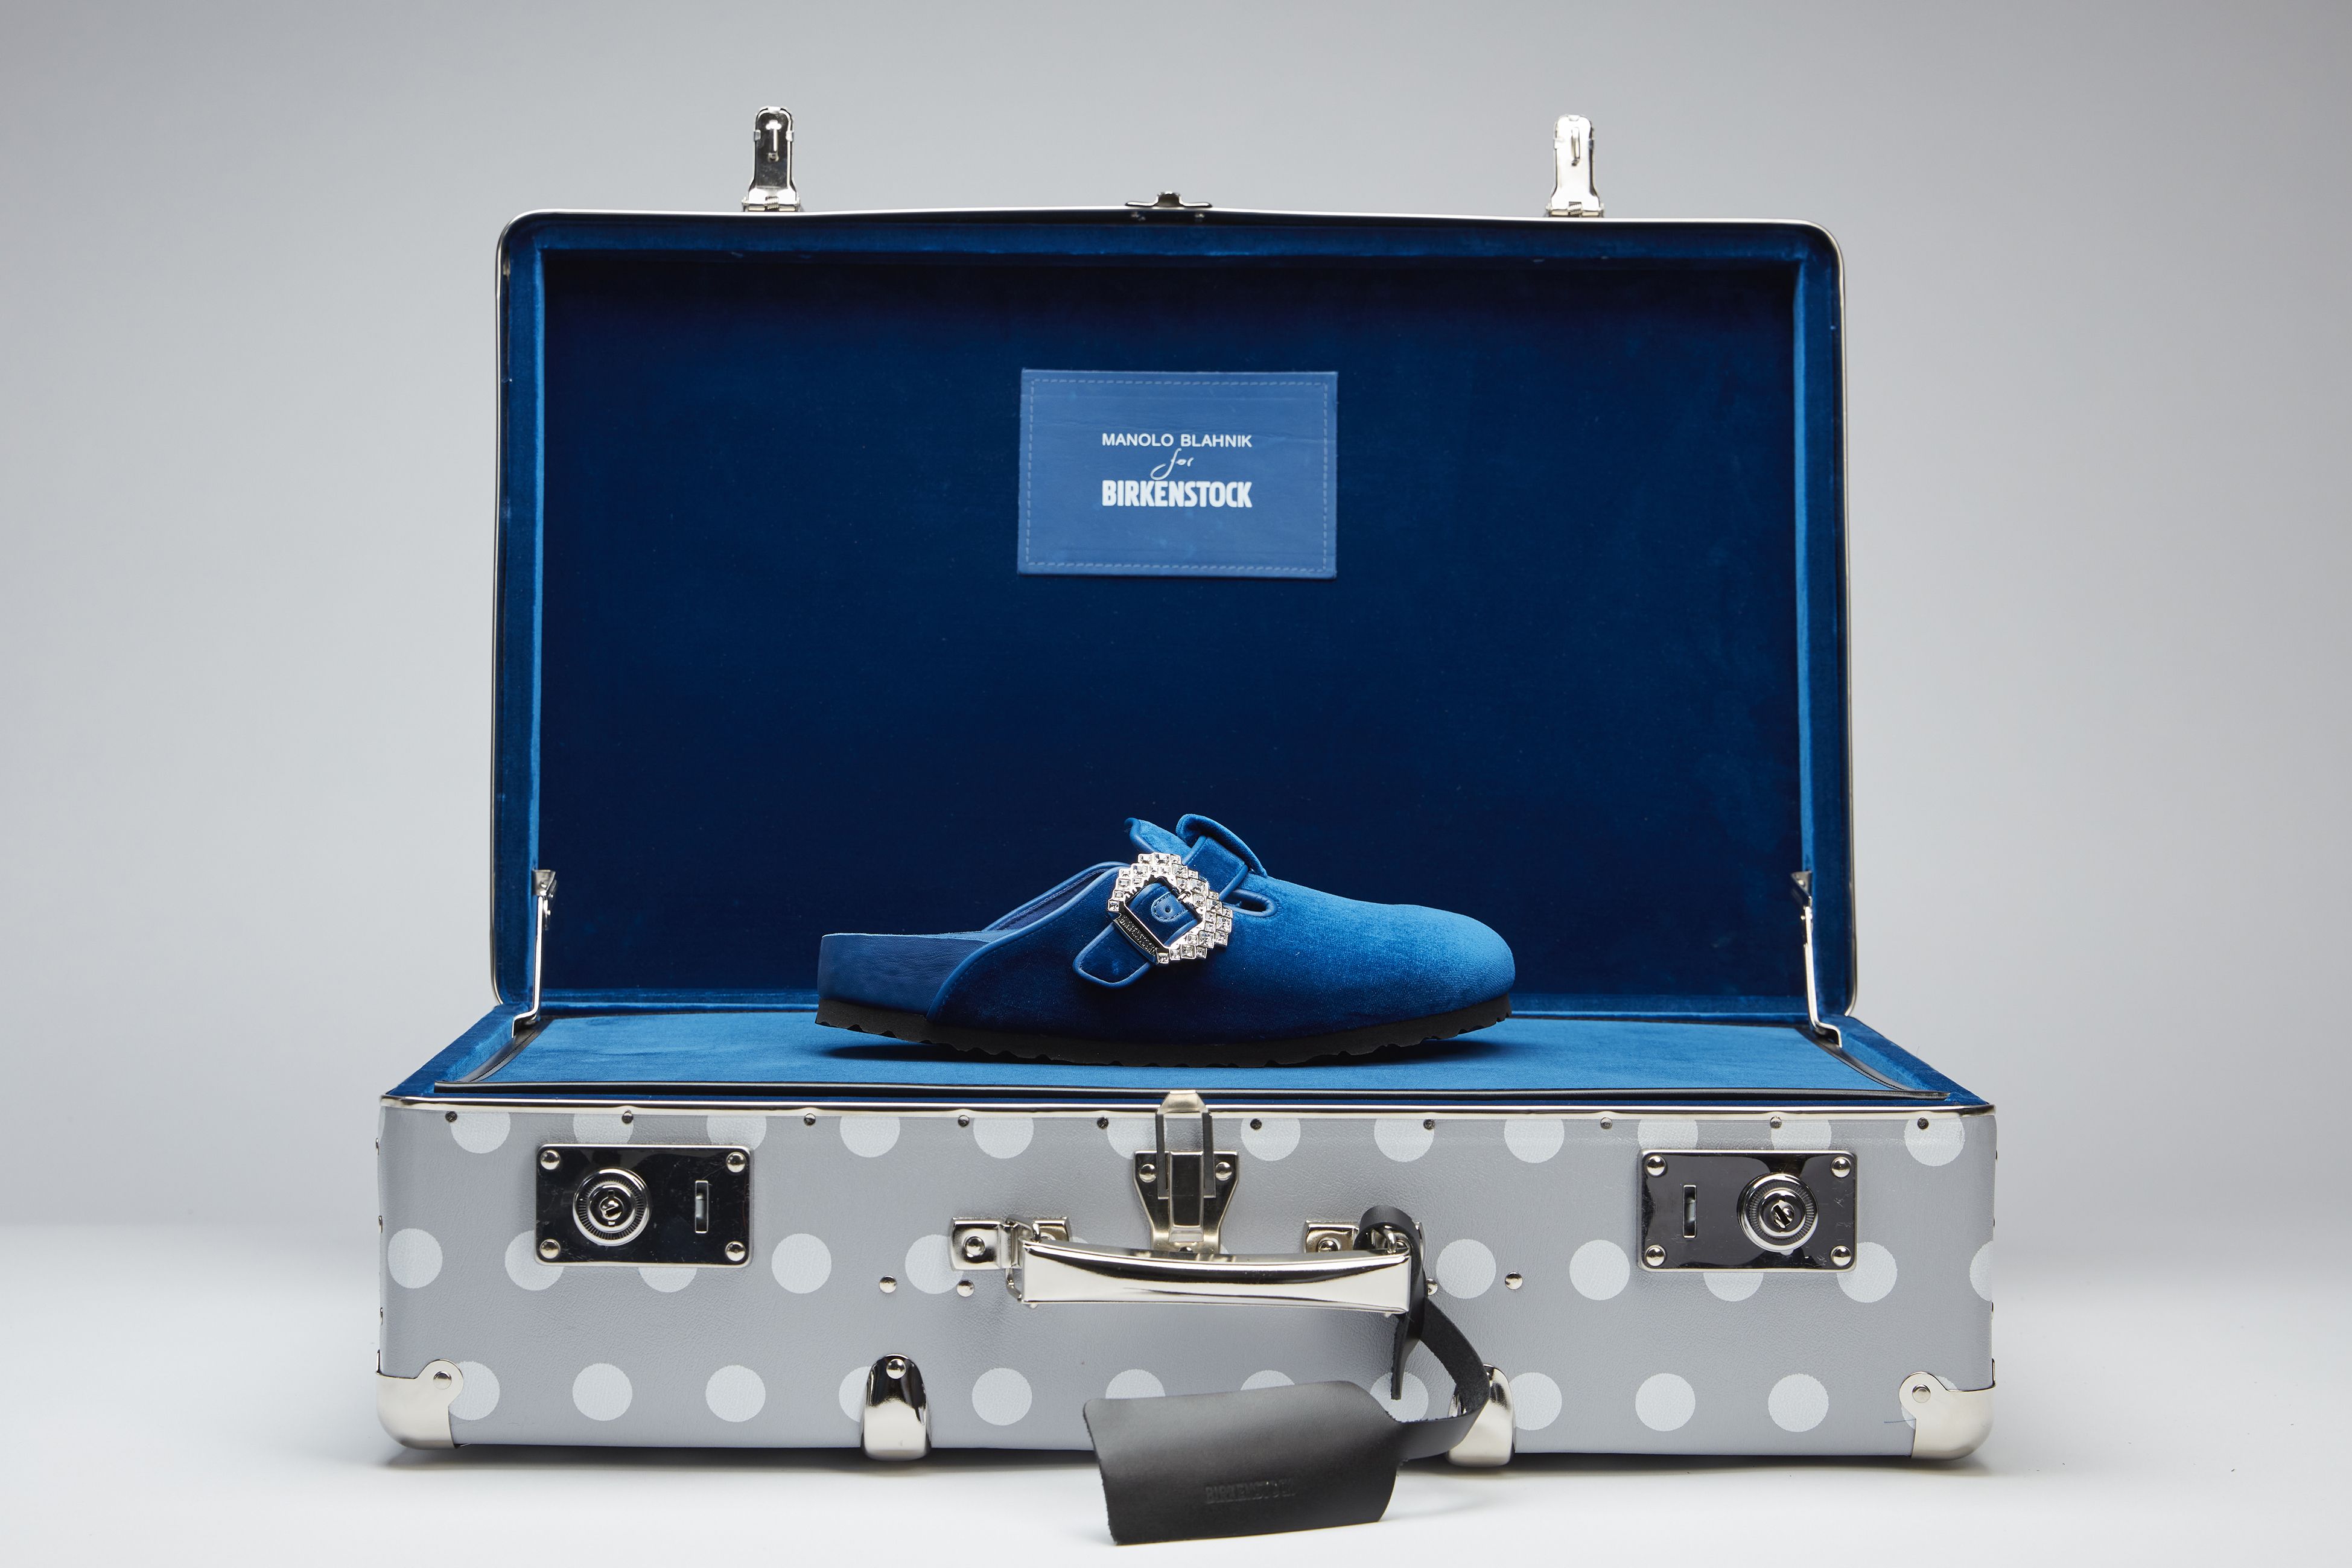 LVMH buys Birkenstock: shoe classic becomes luxury brand - CM